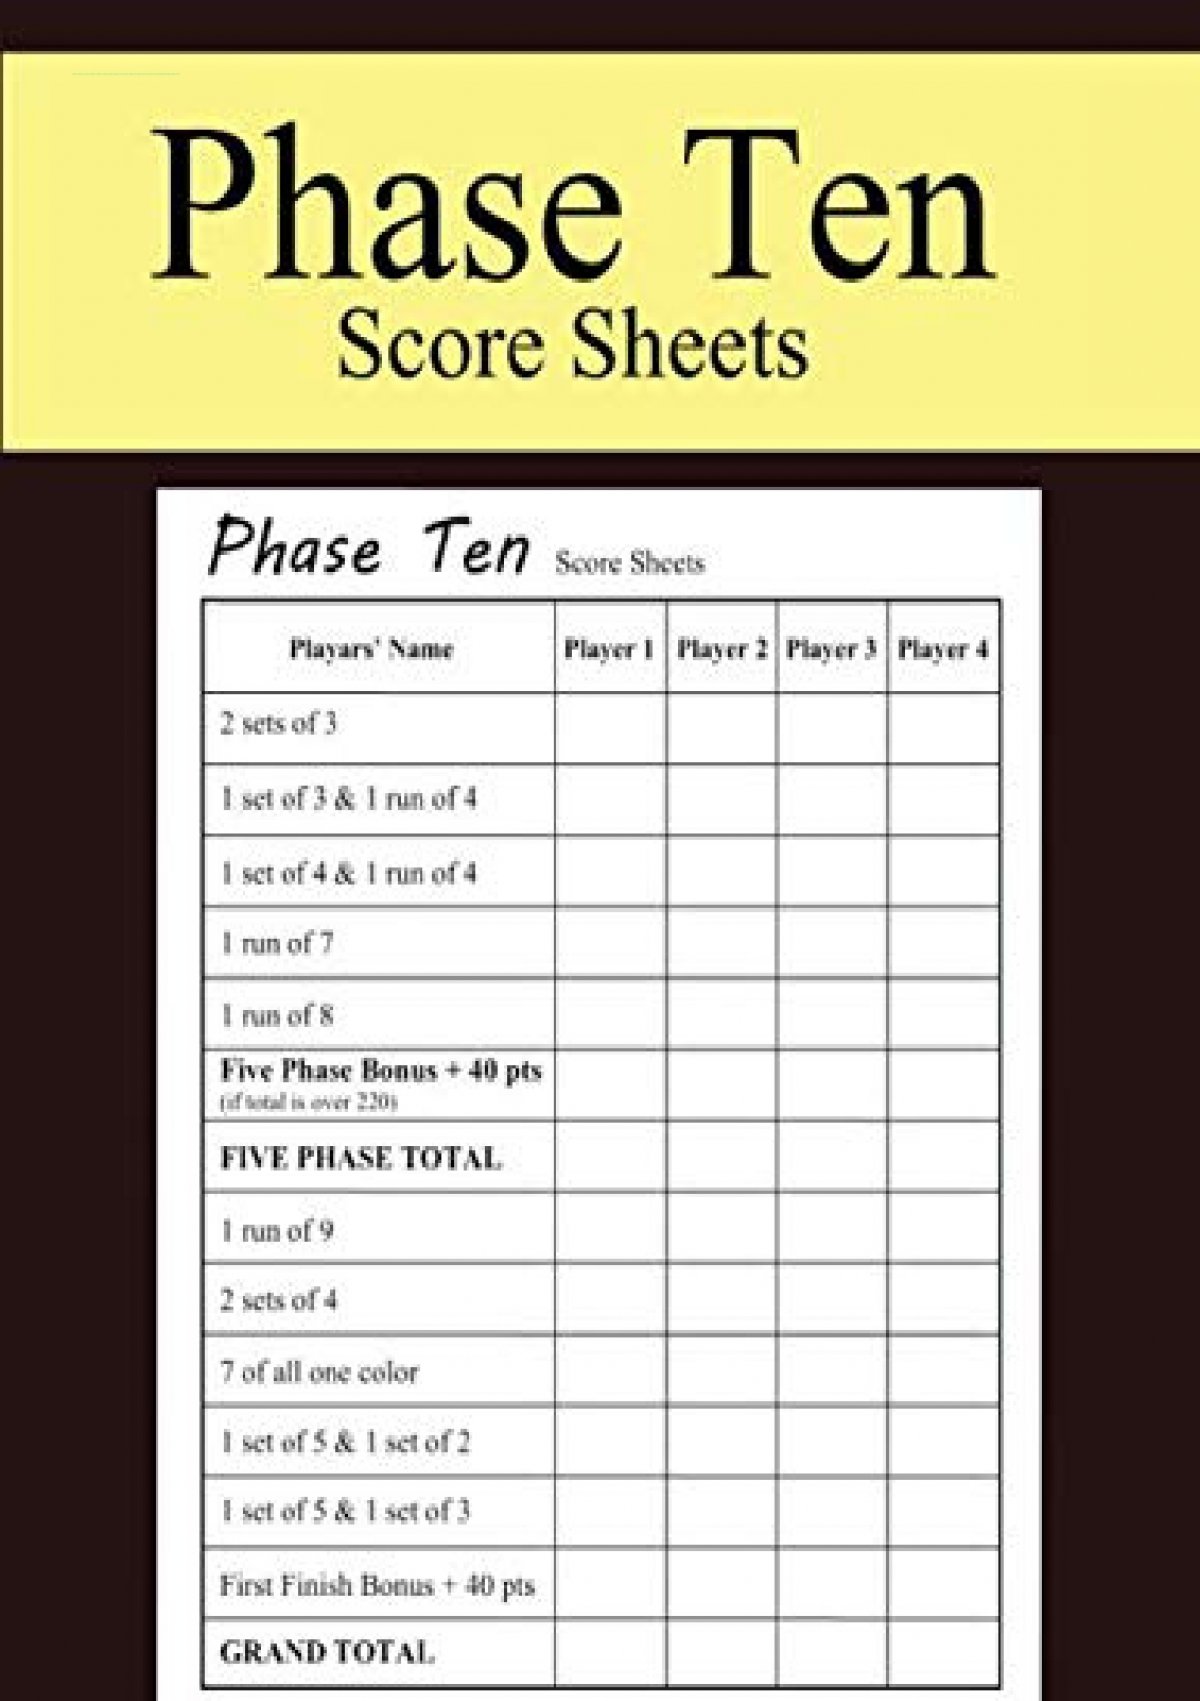 pdf-phase-ten-score-sheets-phase-10-dice-game-phase-10-score-pad-phase-ten-dice-game-phase